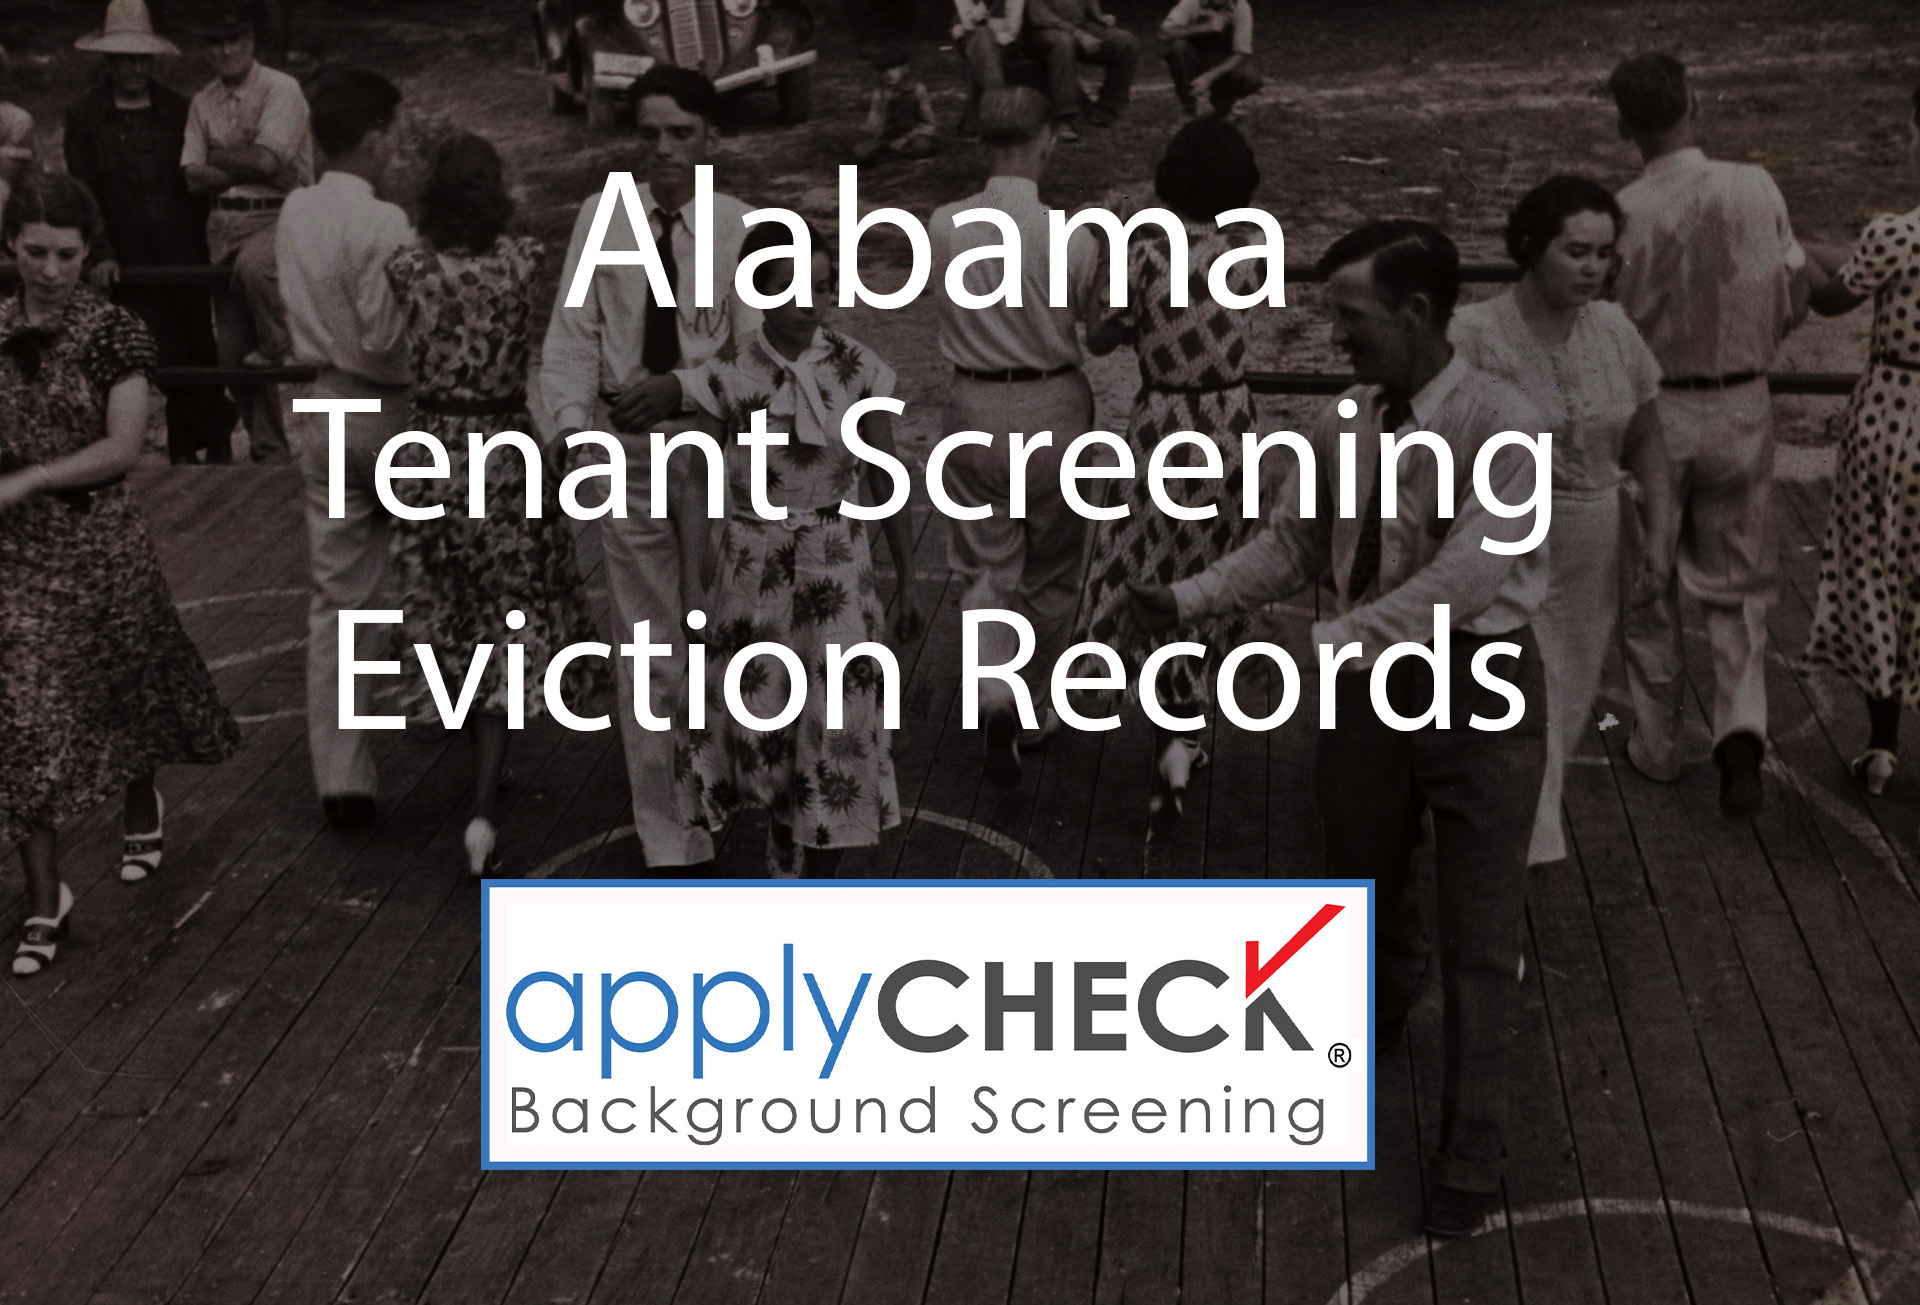 Alabama Tenant Screening and Eviction Records | Applycheck